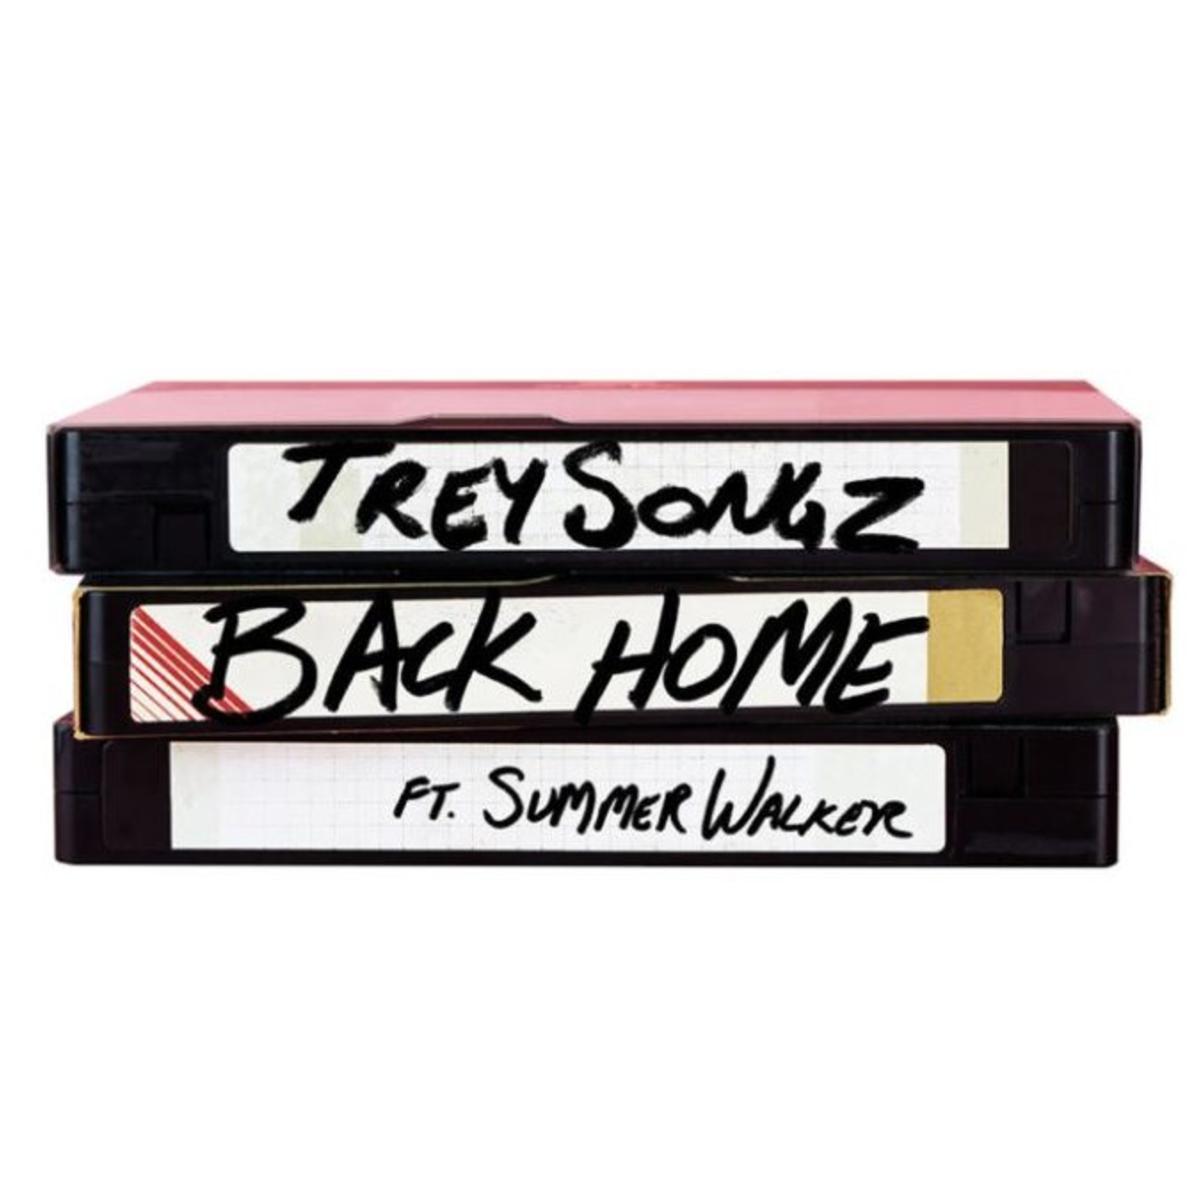 New Music: Trey Songz - Back Home (featuring Summer Walker)